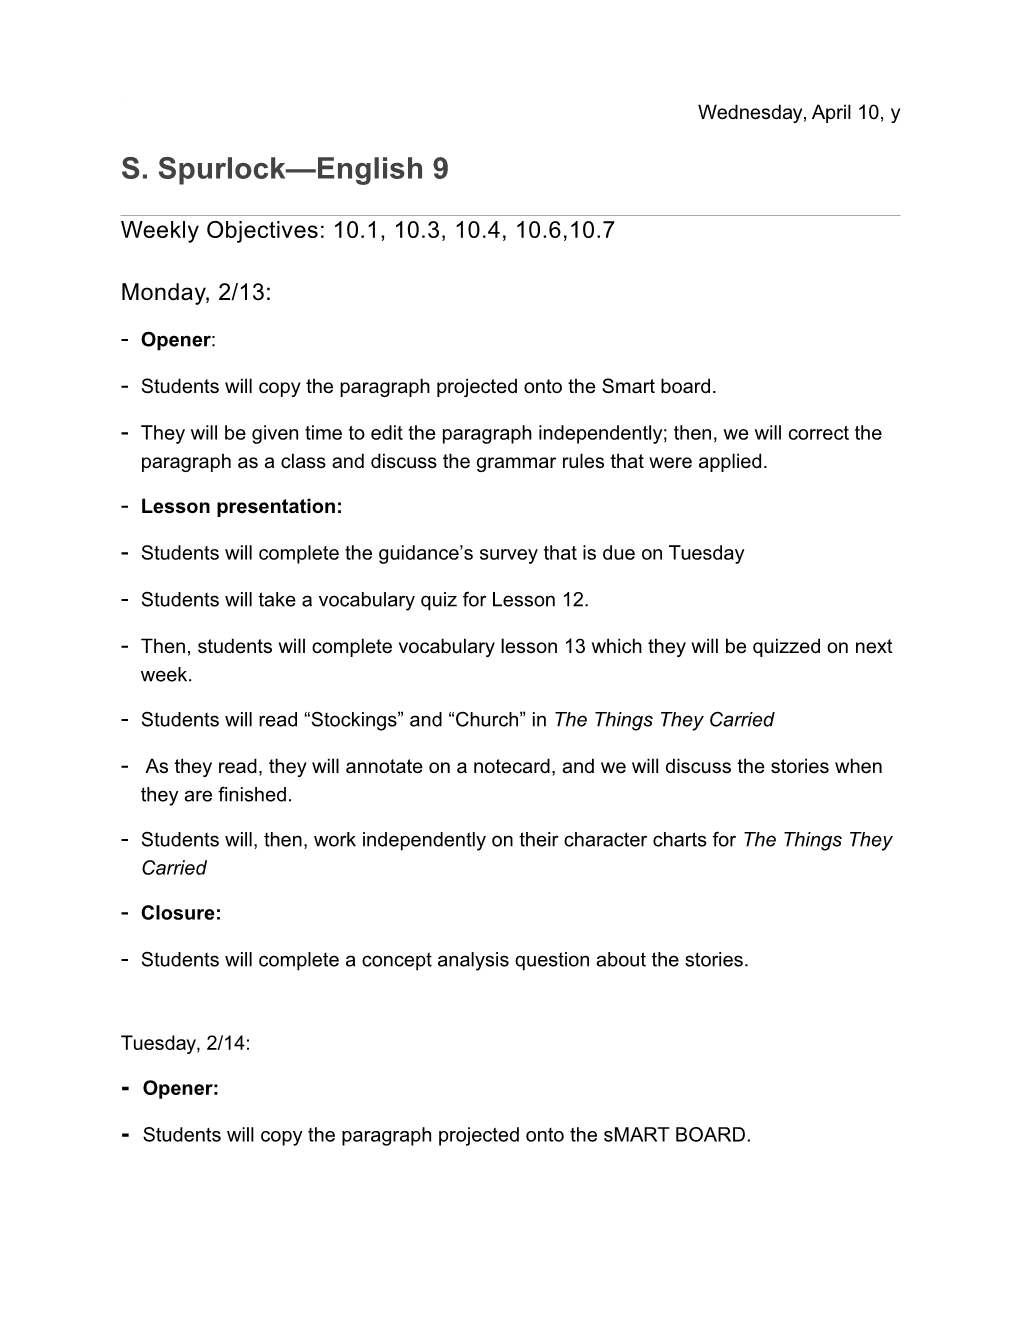 S. Spurlock English 9